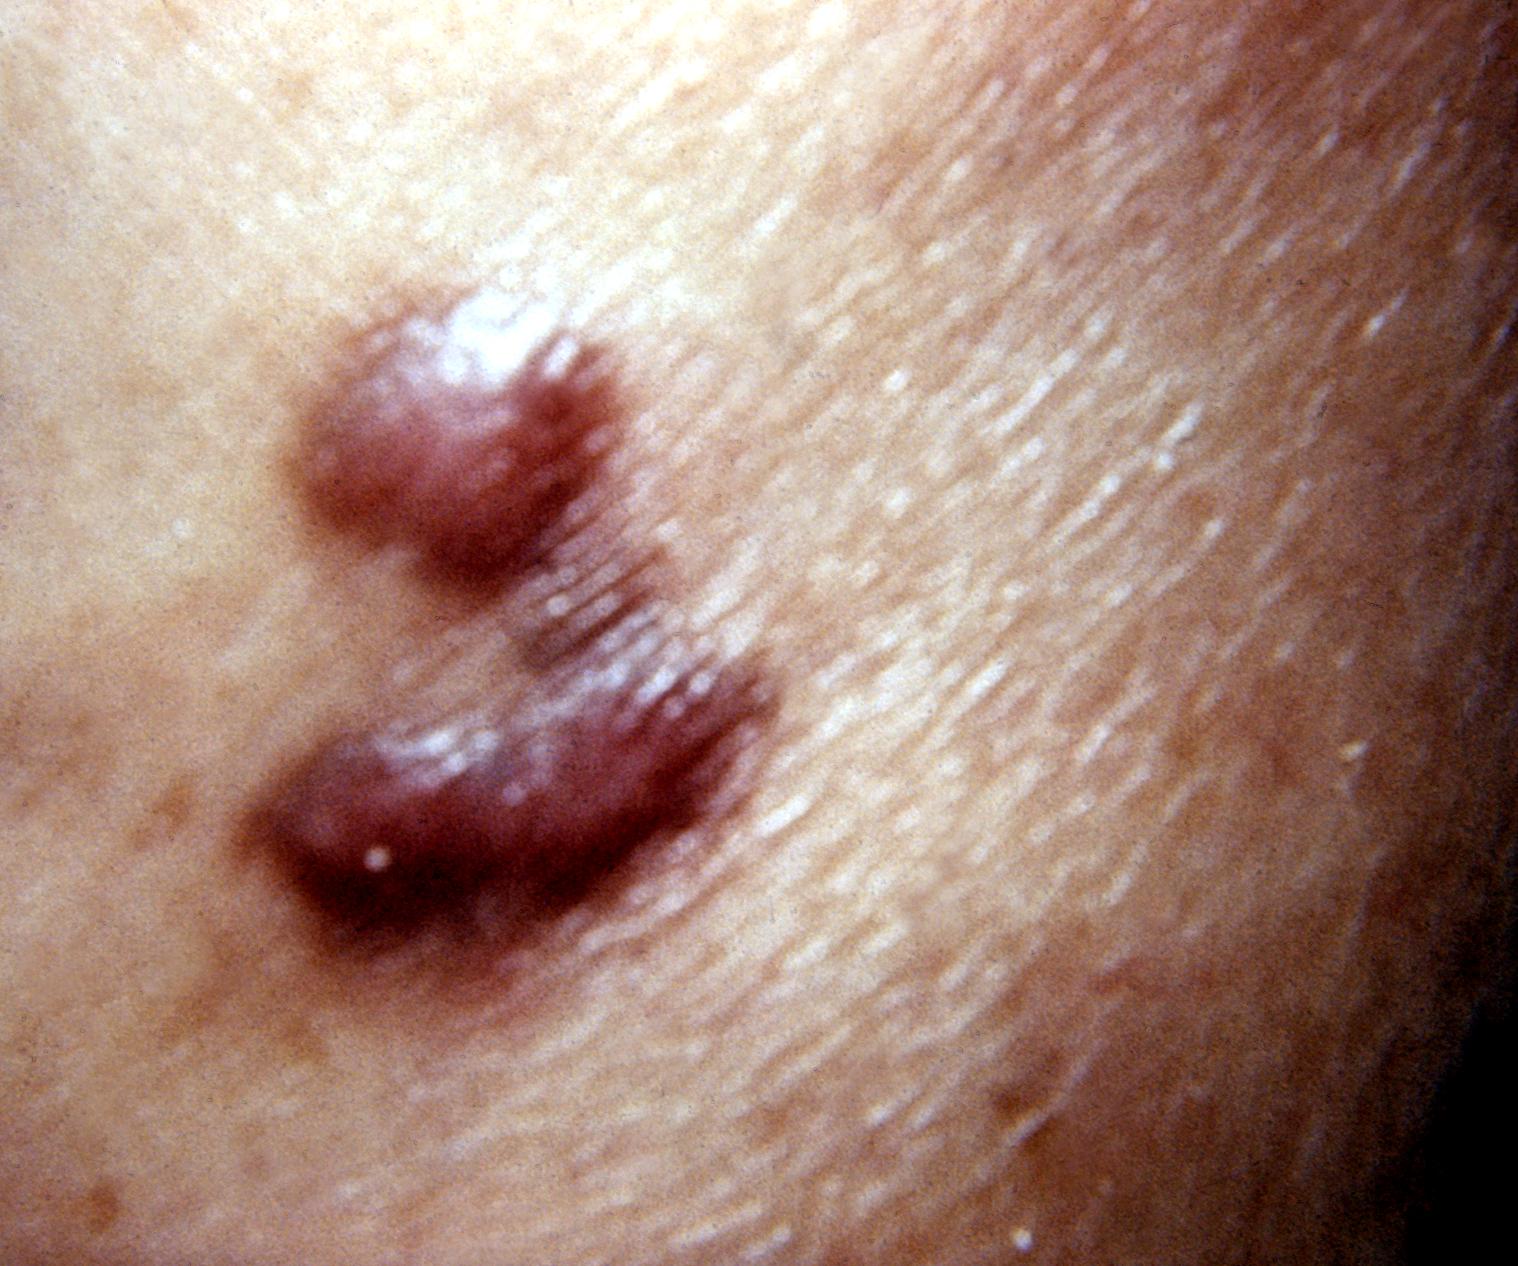 Kaposi sarcoma lesion Source: Wikimedia Commons.[16]